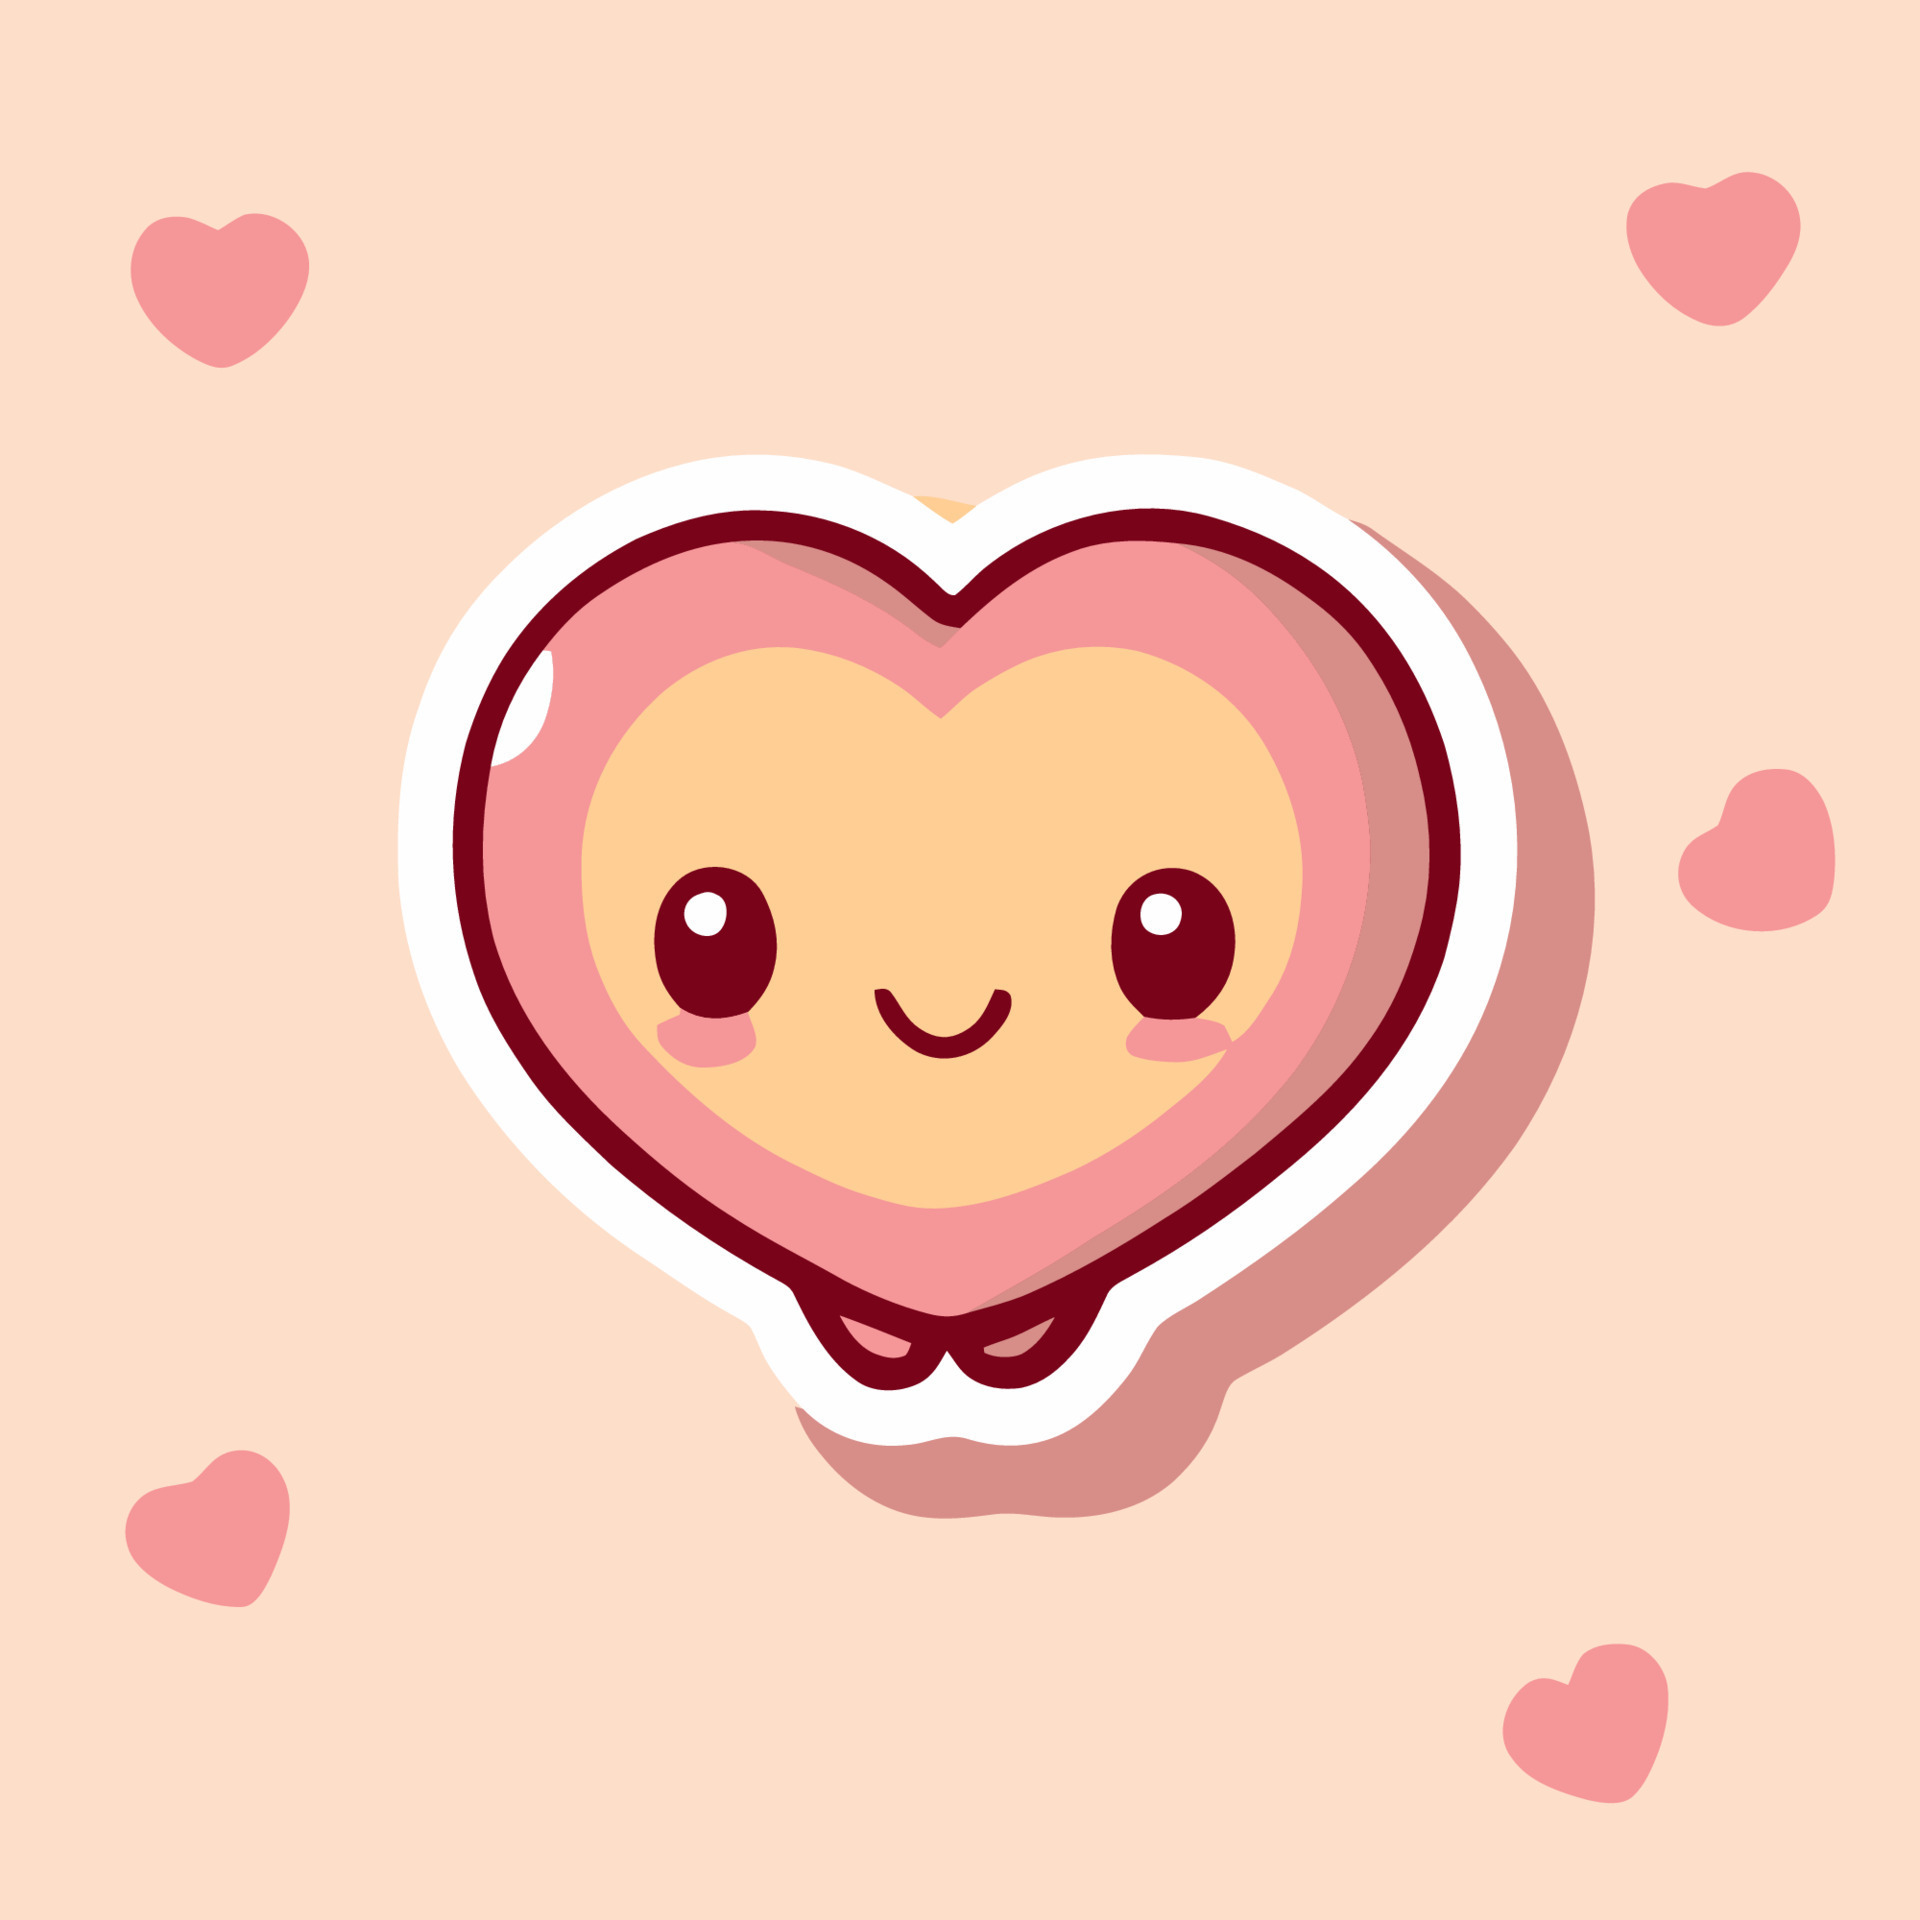 Valentines day Cute Heart illustration Heart kawaii chibi vector drawing style Heart cartoon Valentine's day 17048268 Vector Art at Vecteezy